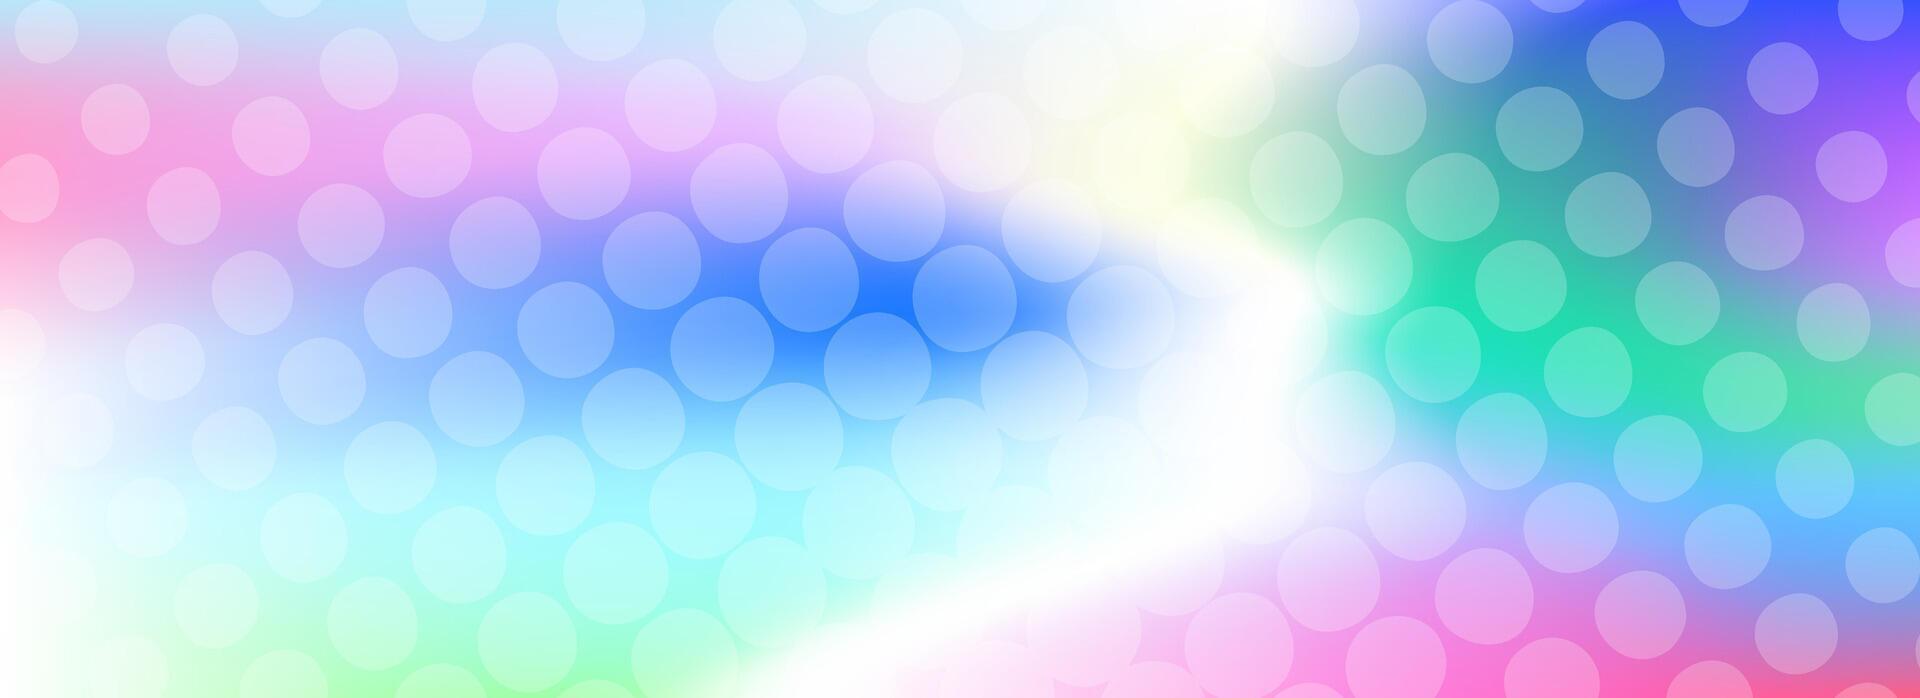 modern Farben Banner Hintergrund, Blau, Türkis, Rosa, lila, lila Farbe Kombination. vektor